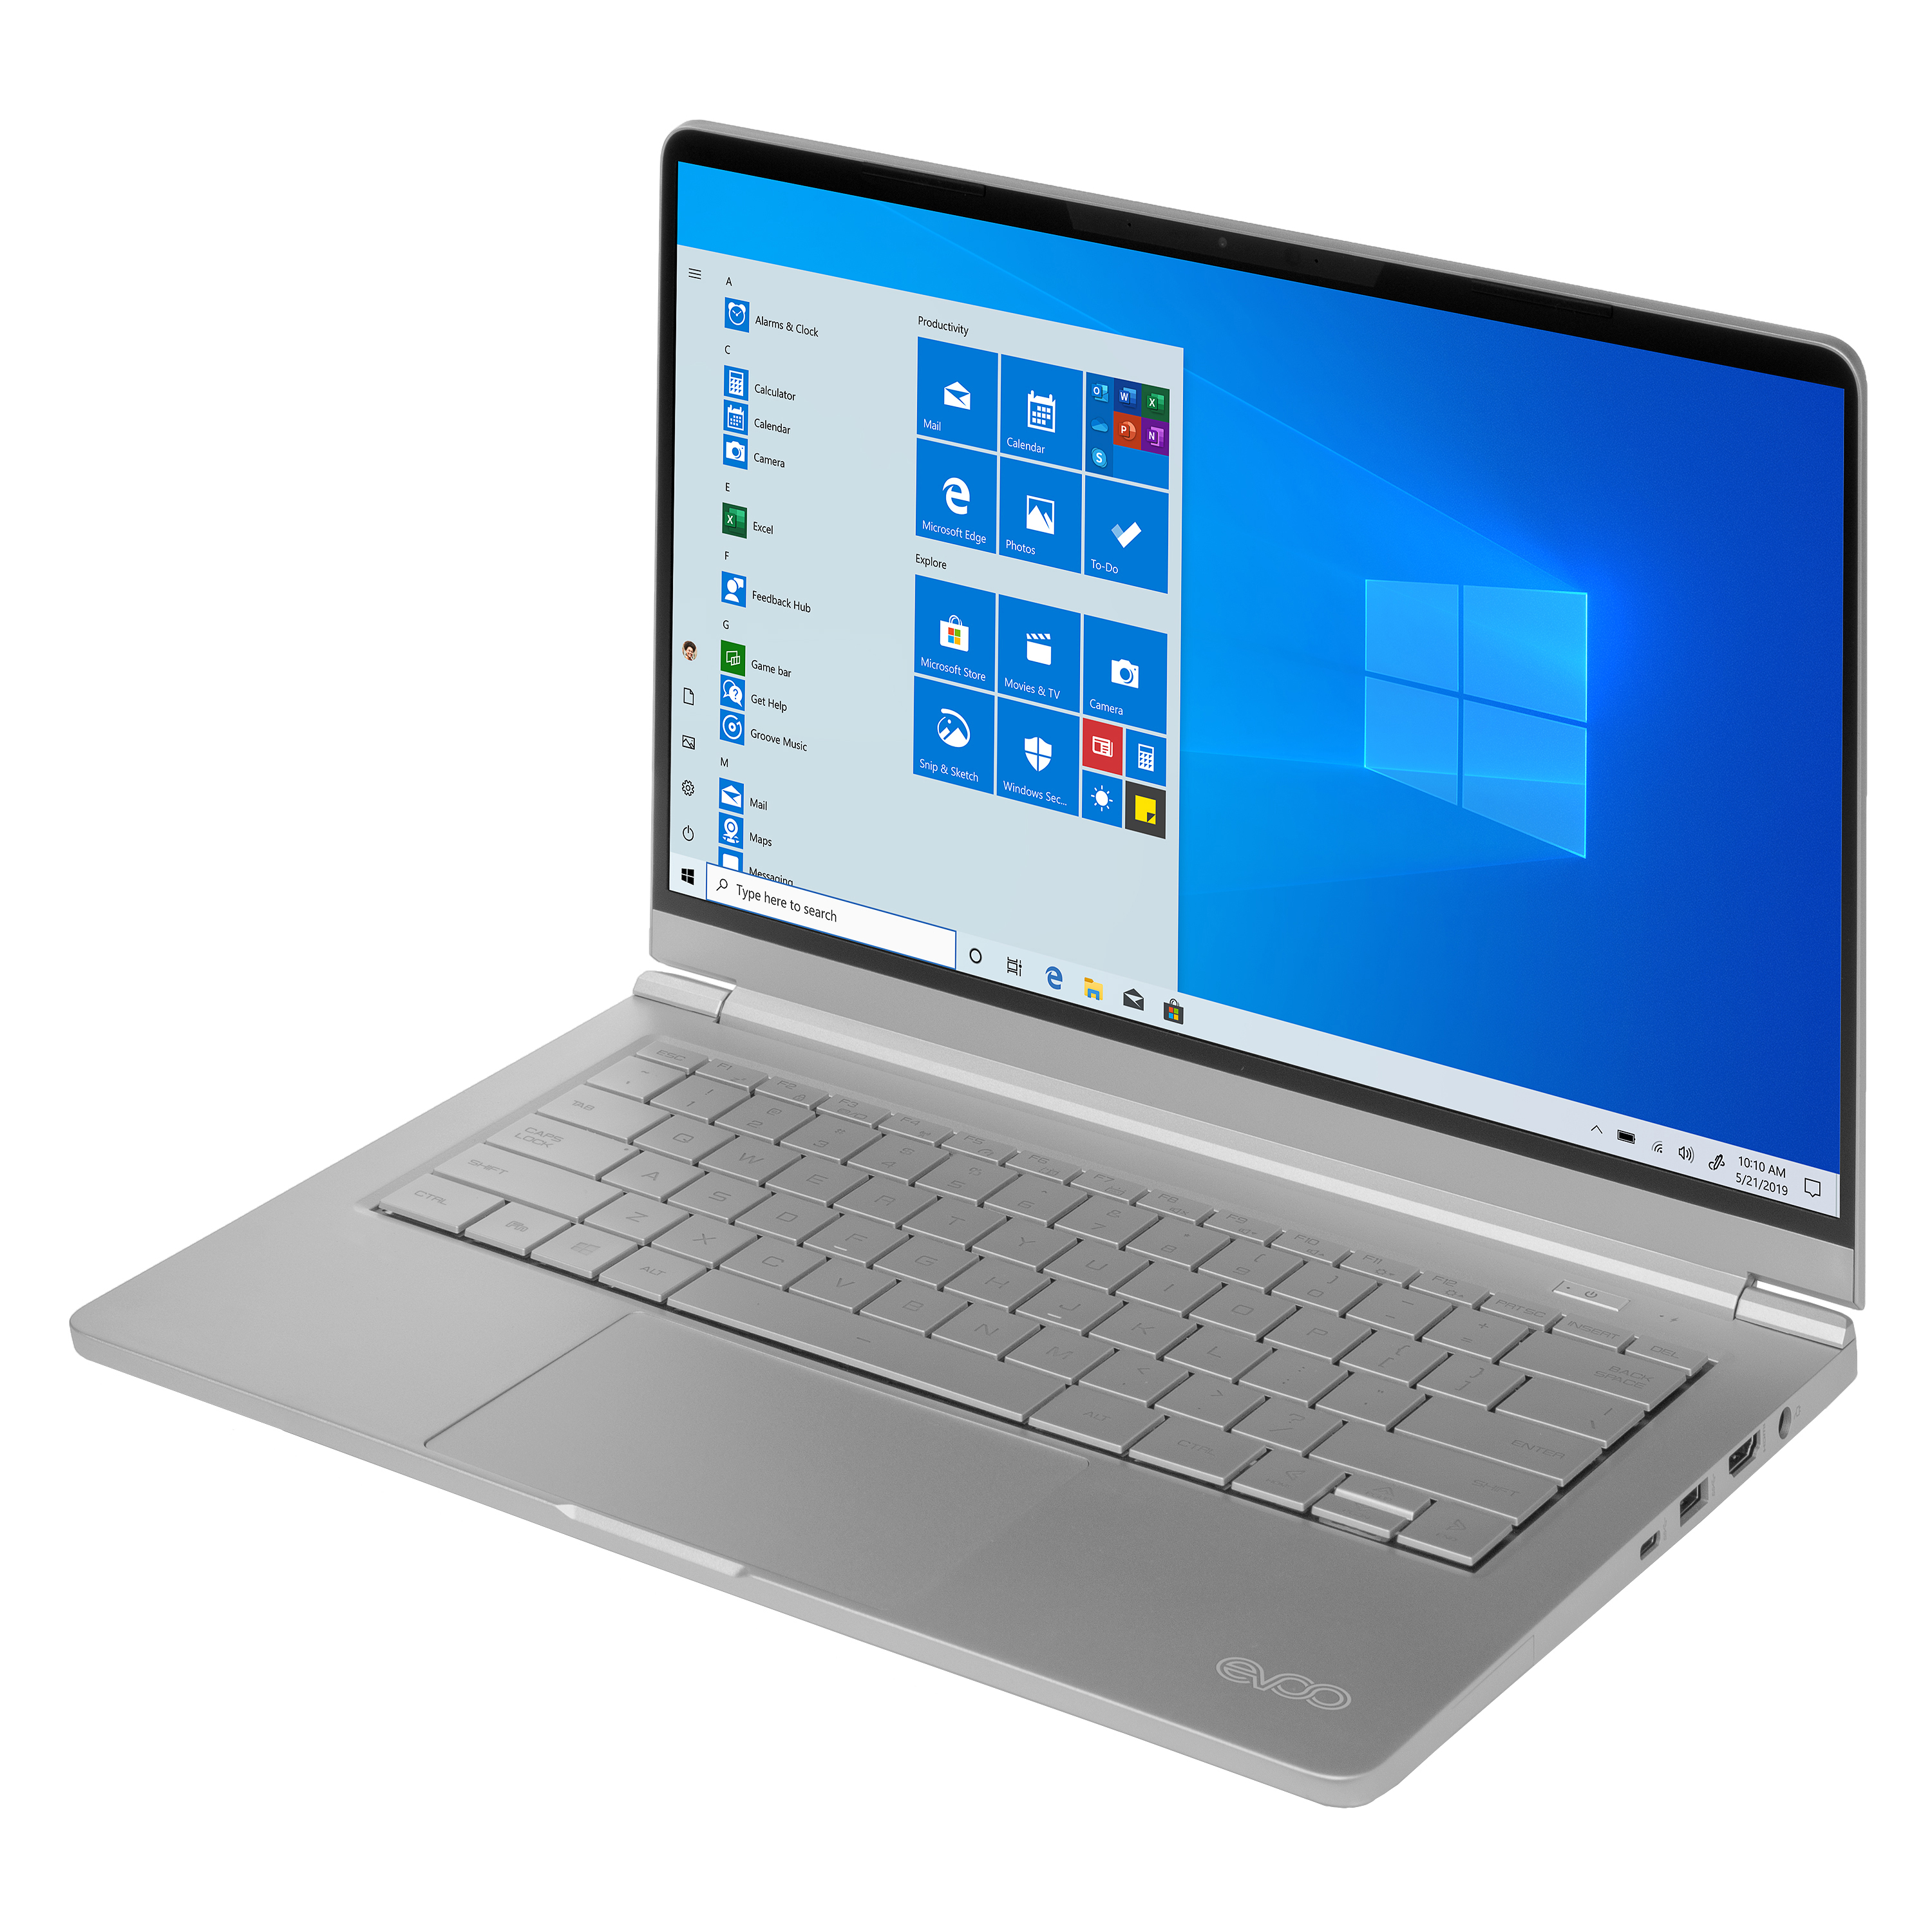 EVOO 14.1” Ultra Slim Notebook - Elite Series, FHD Display, AMD Ryzen 5 3500U Processor with Radeon Vega 8 Graphics, 8GB RAM, 256GB SSD, HD Webcam, Windows 10 Home, Silver - image 3 of 9